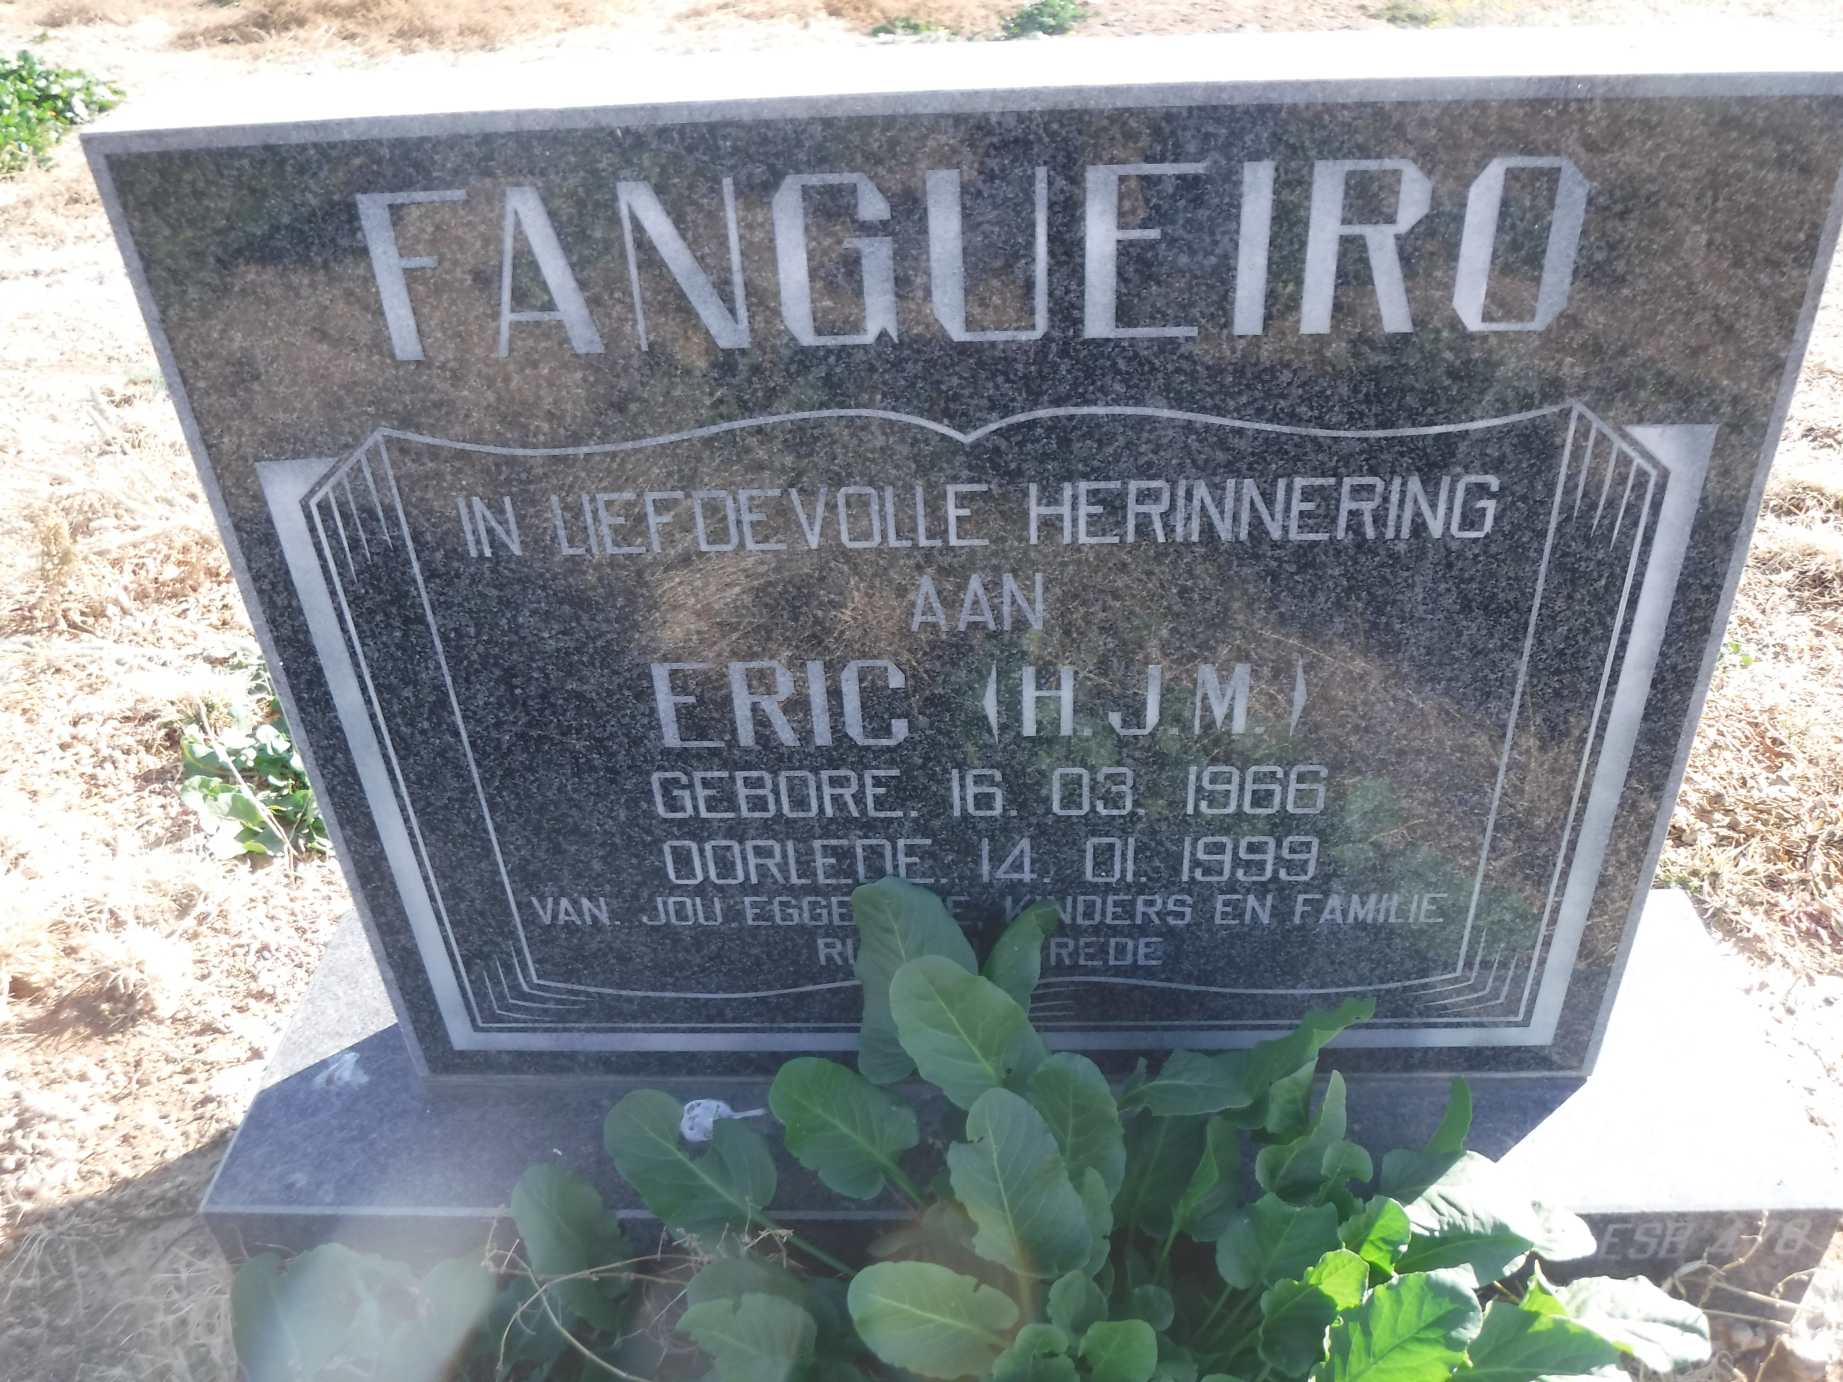 FANGUEIRO H.J.M. 1966-1999